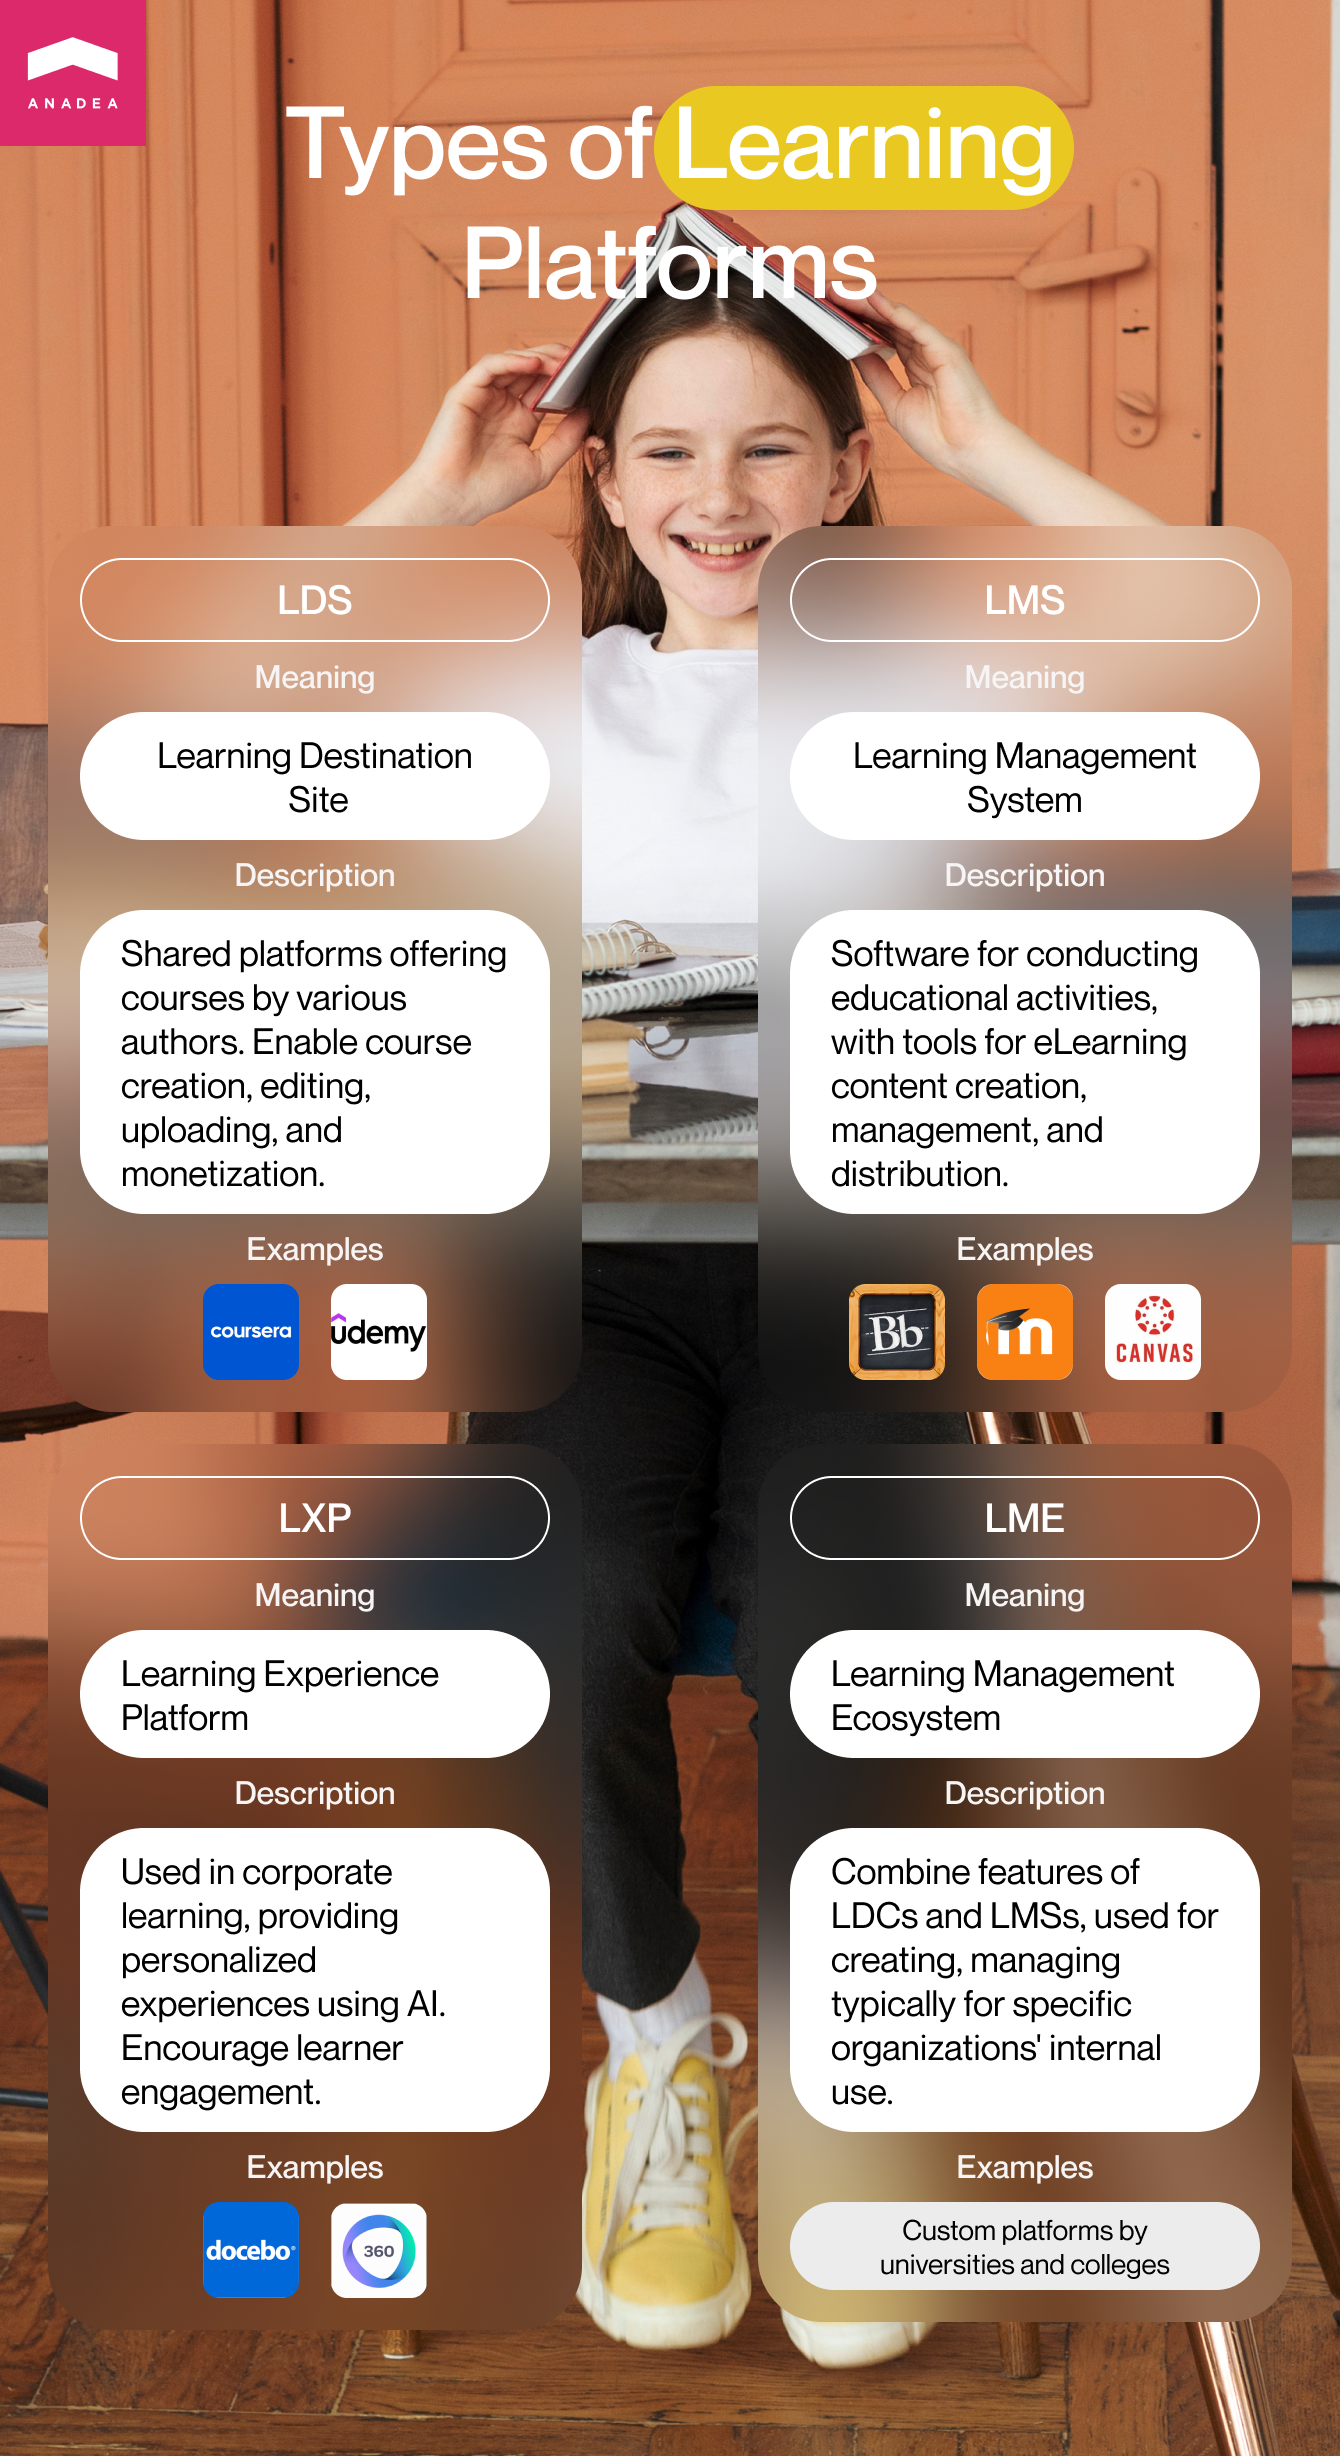 Types of online learning platforms - LDS, LMS, LXP, LME